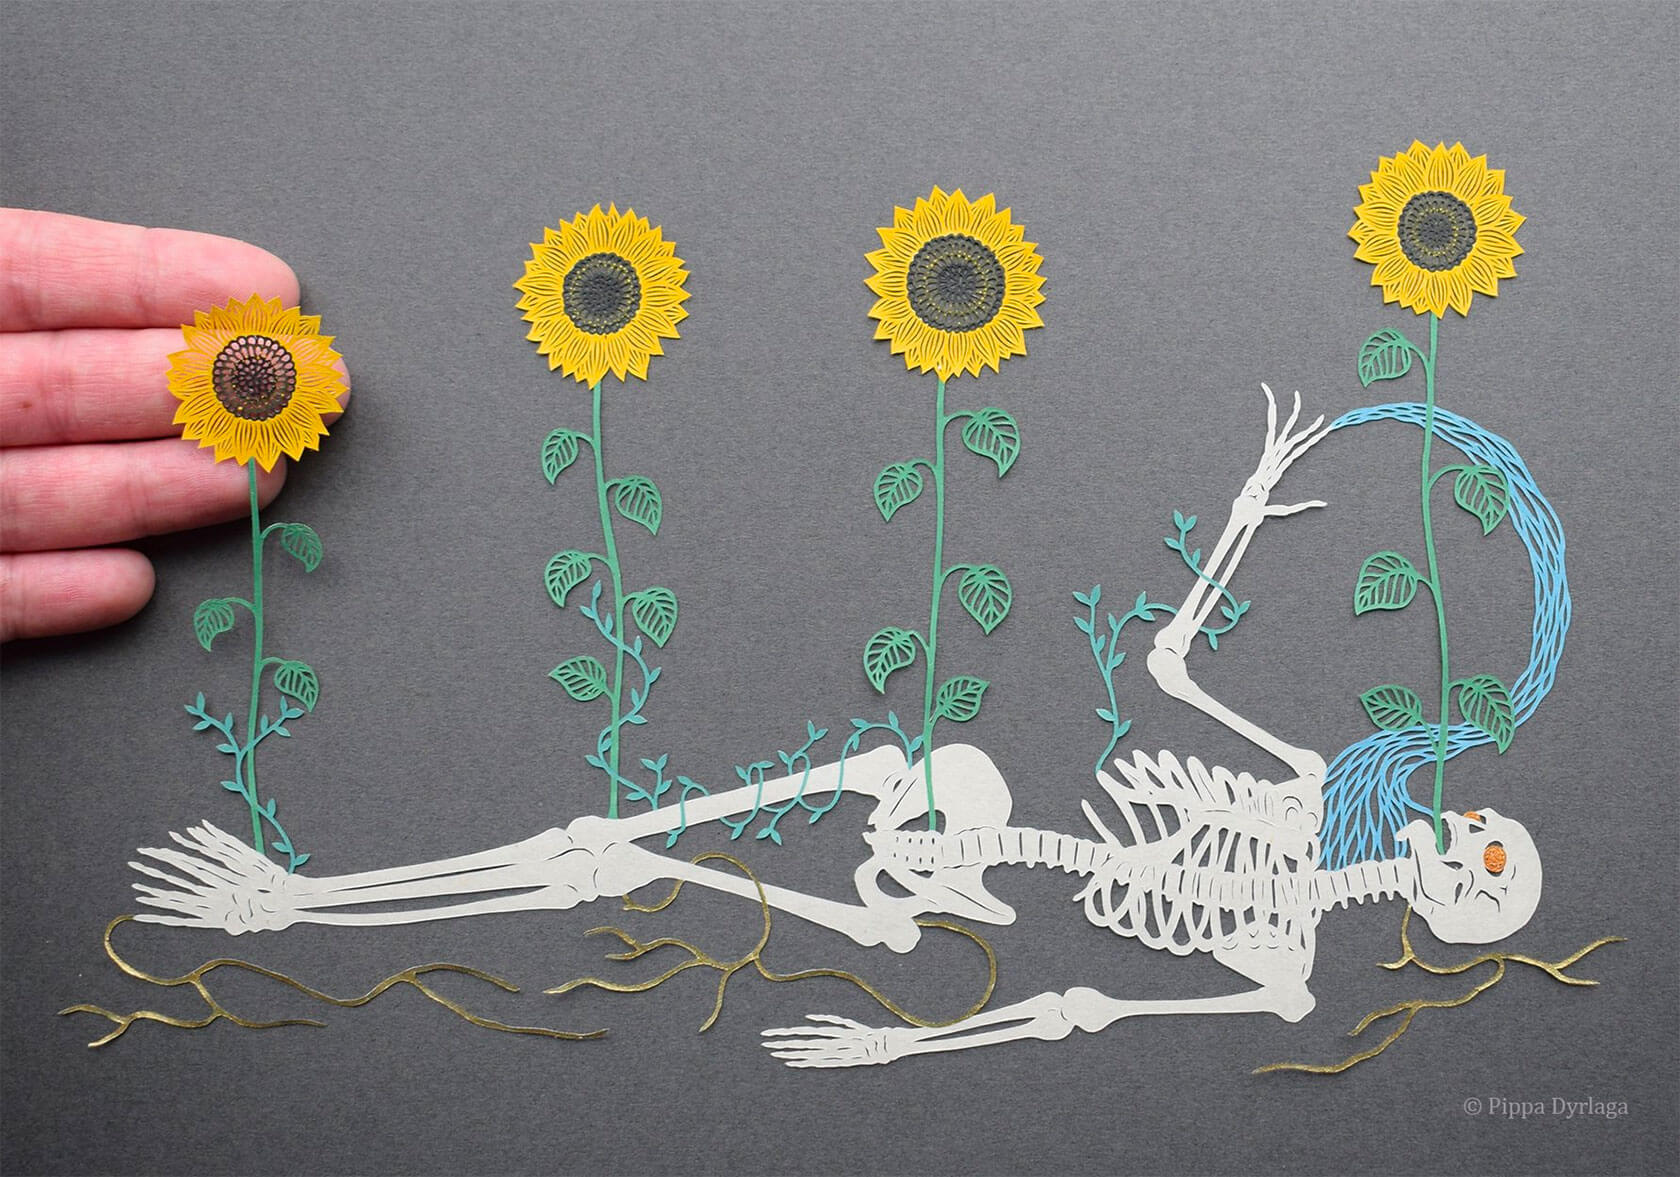 Brilliant Paper Art - Paper Cutting Artwork By Pippa Dyrlaga